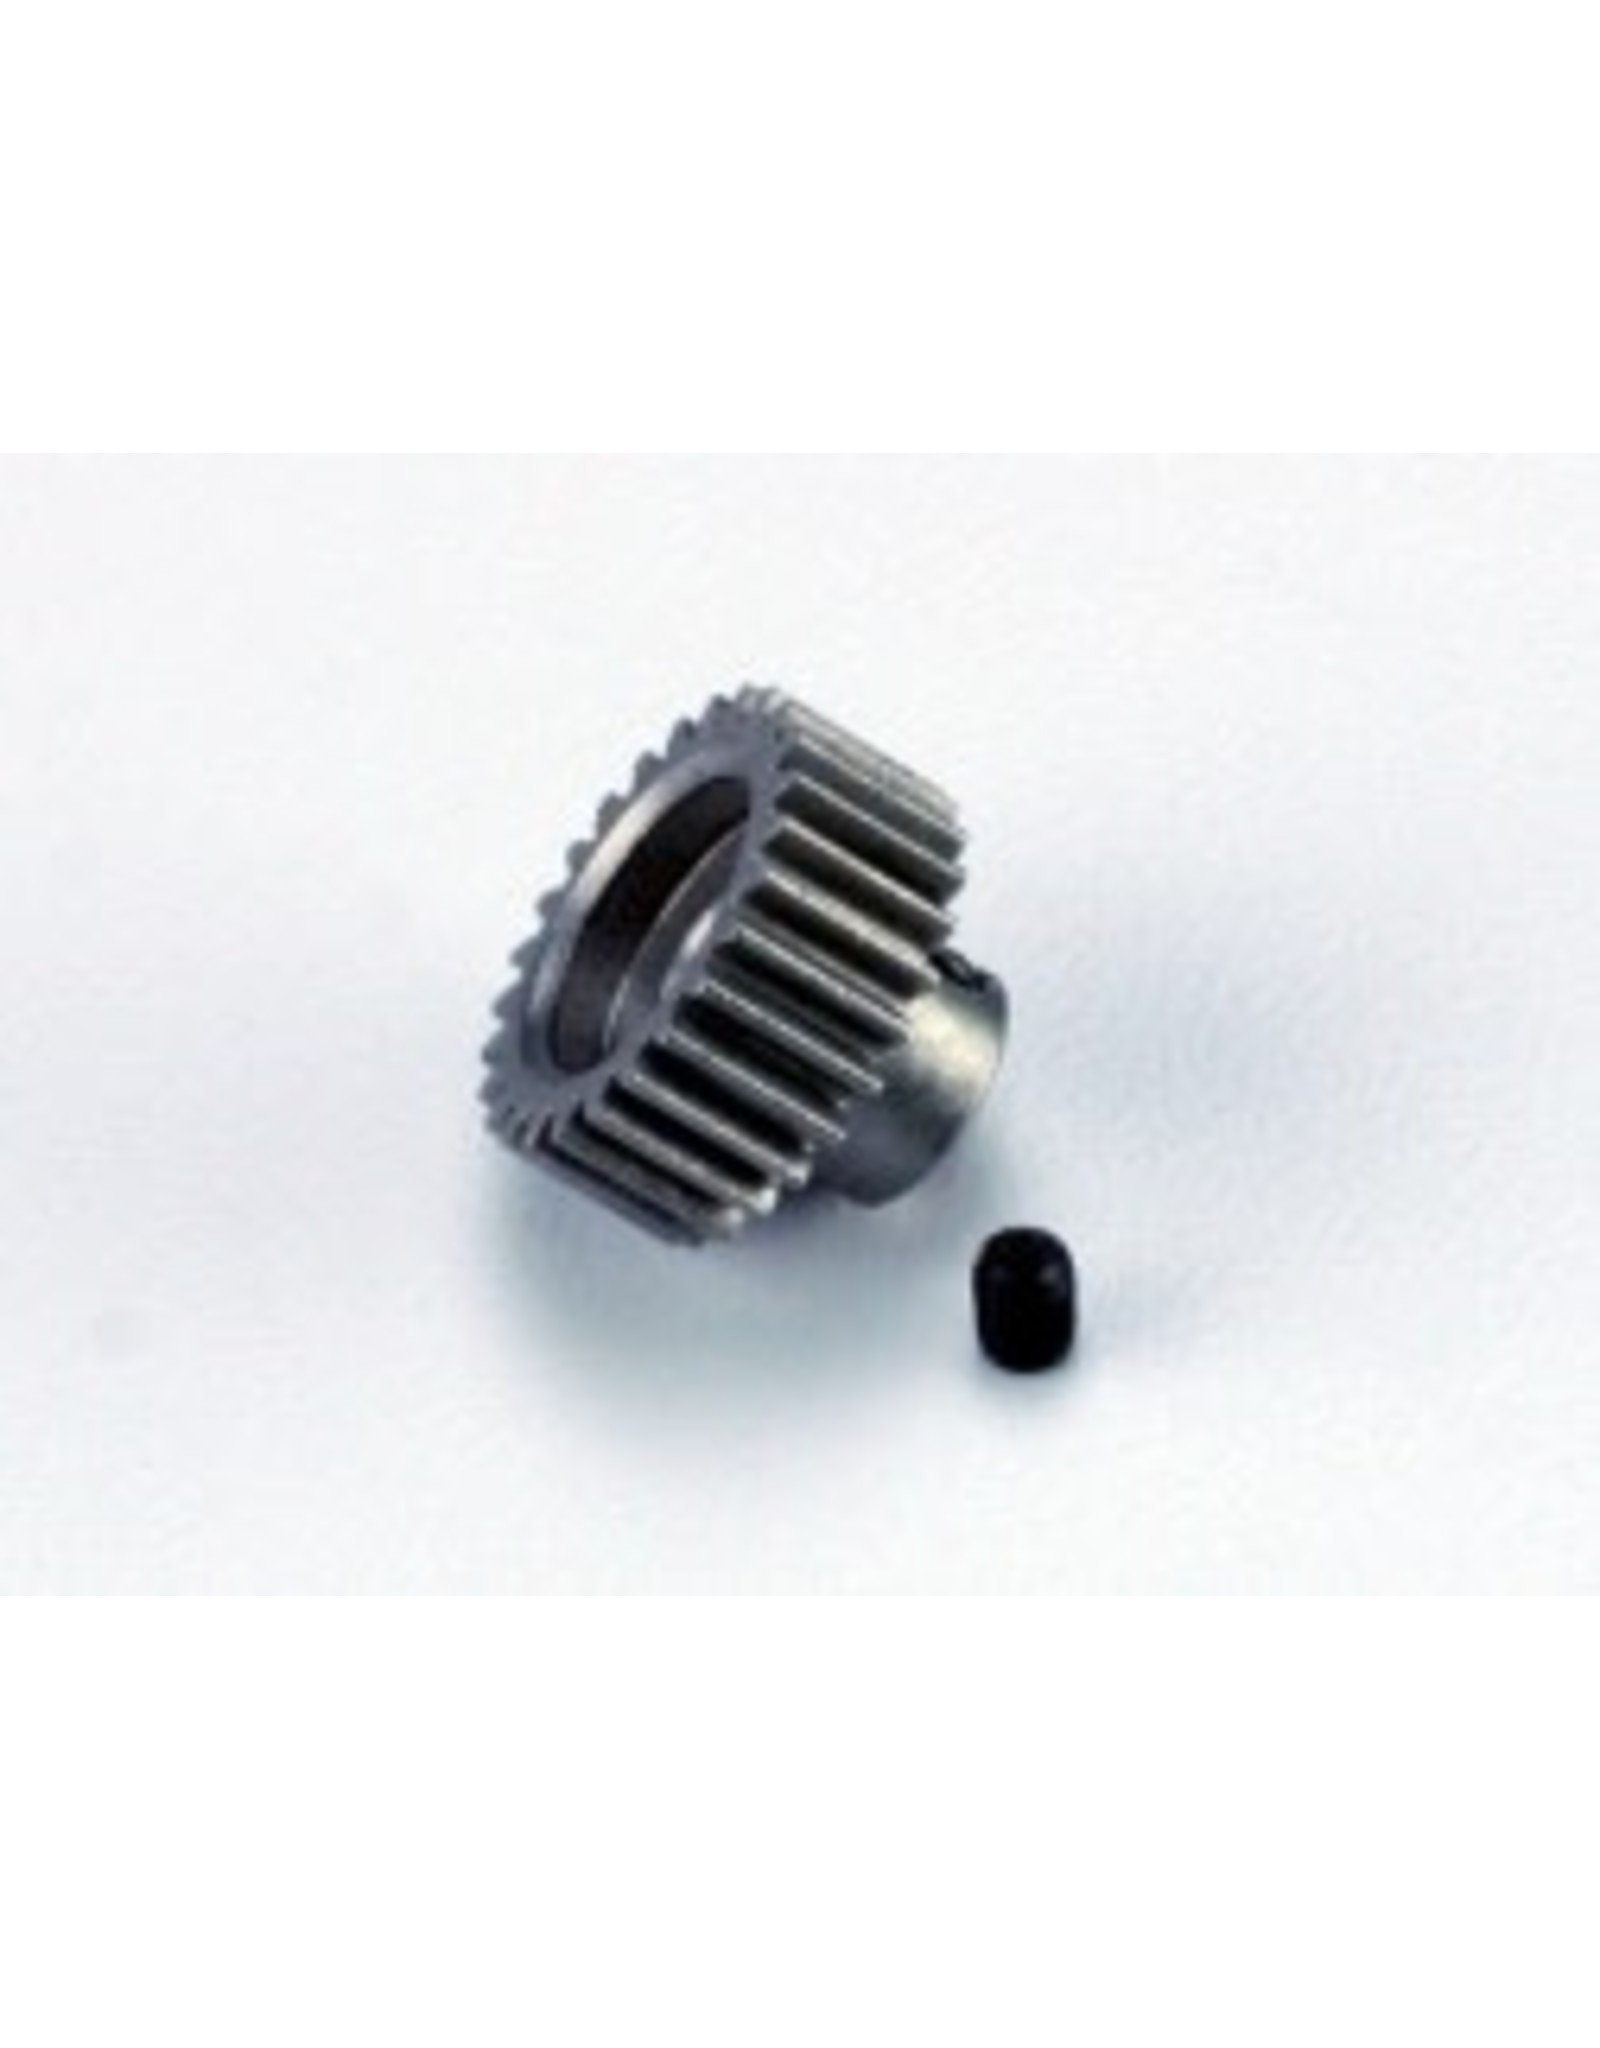 Traxxas [Gear, 26-T pinion (48-pitch)/set screw] Gear, 26-T pinion (48-pitch)/set screw